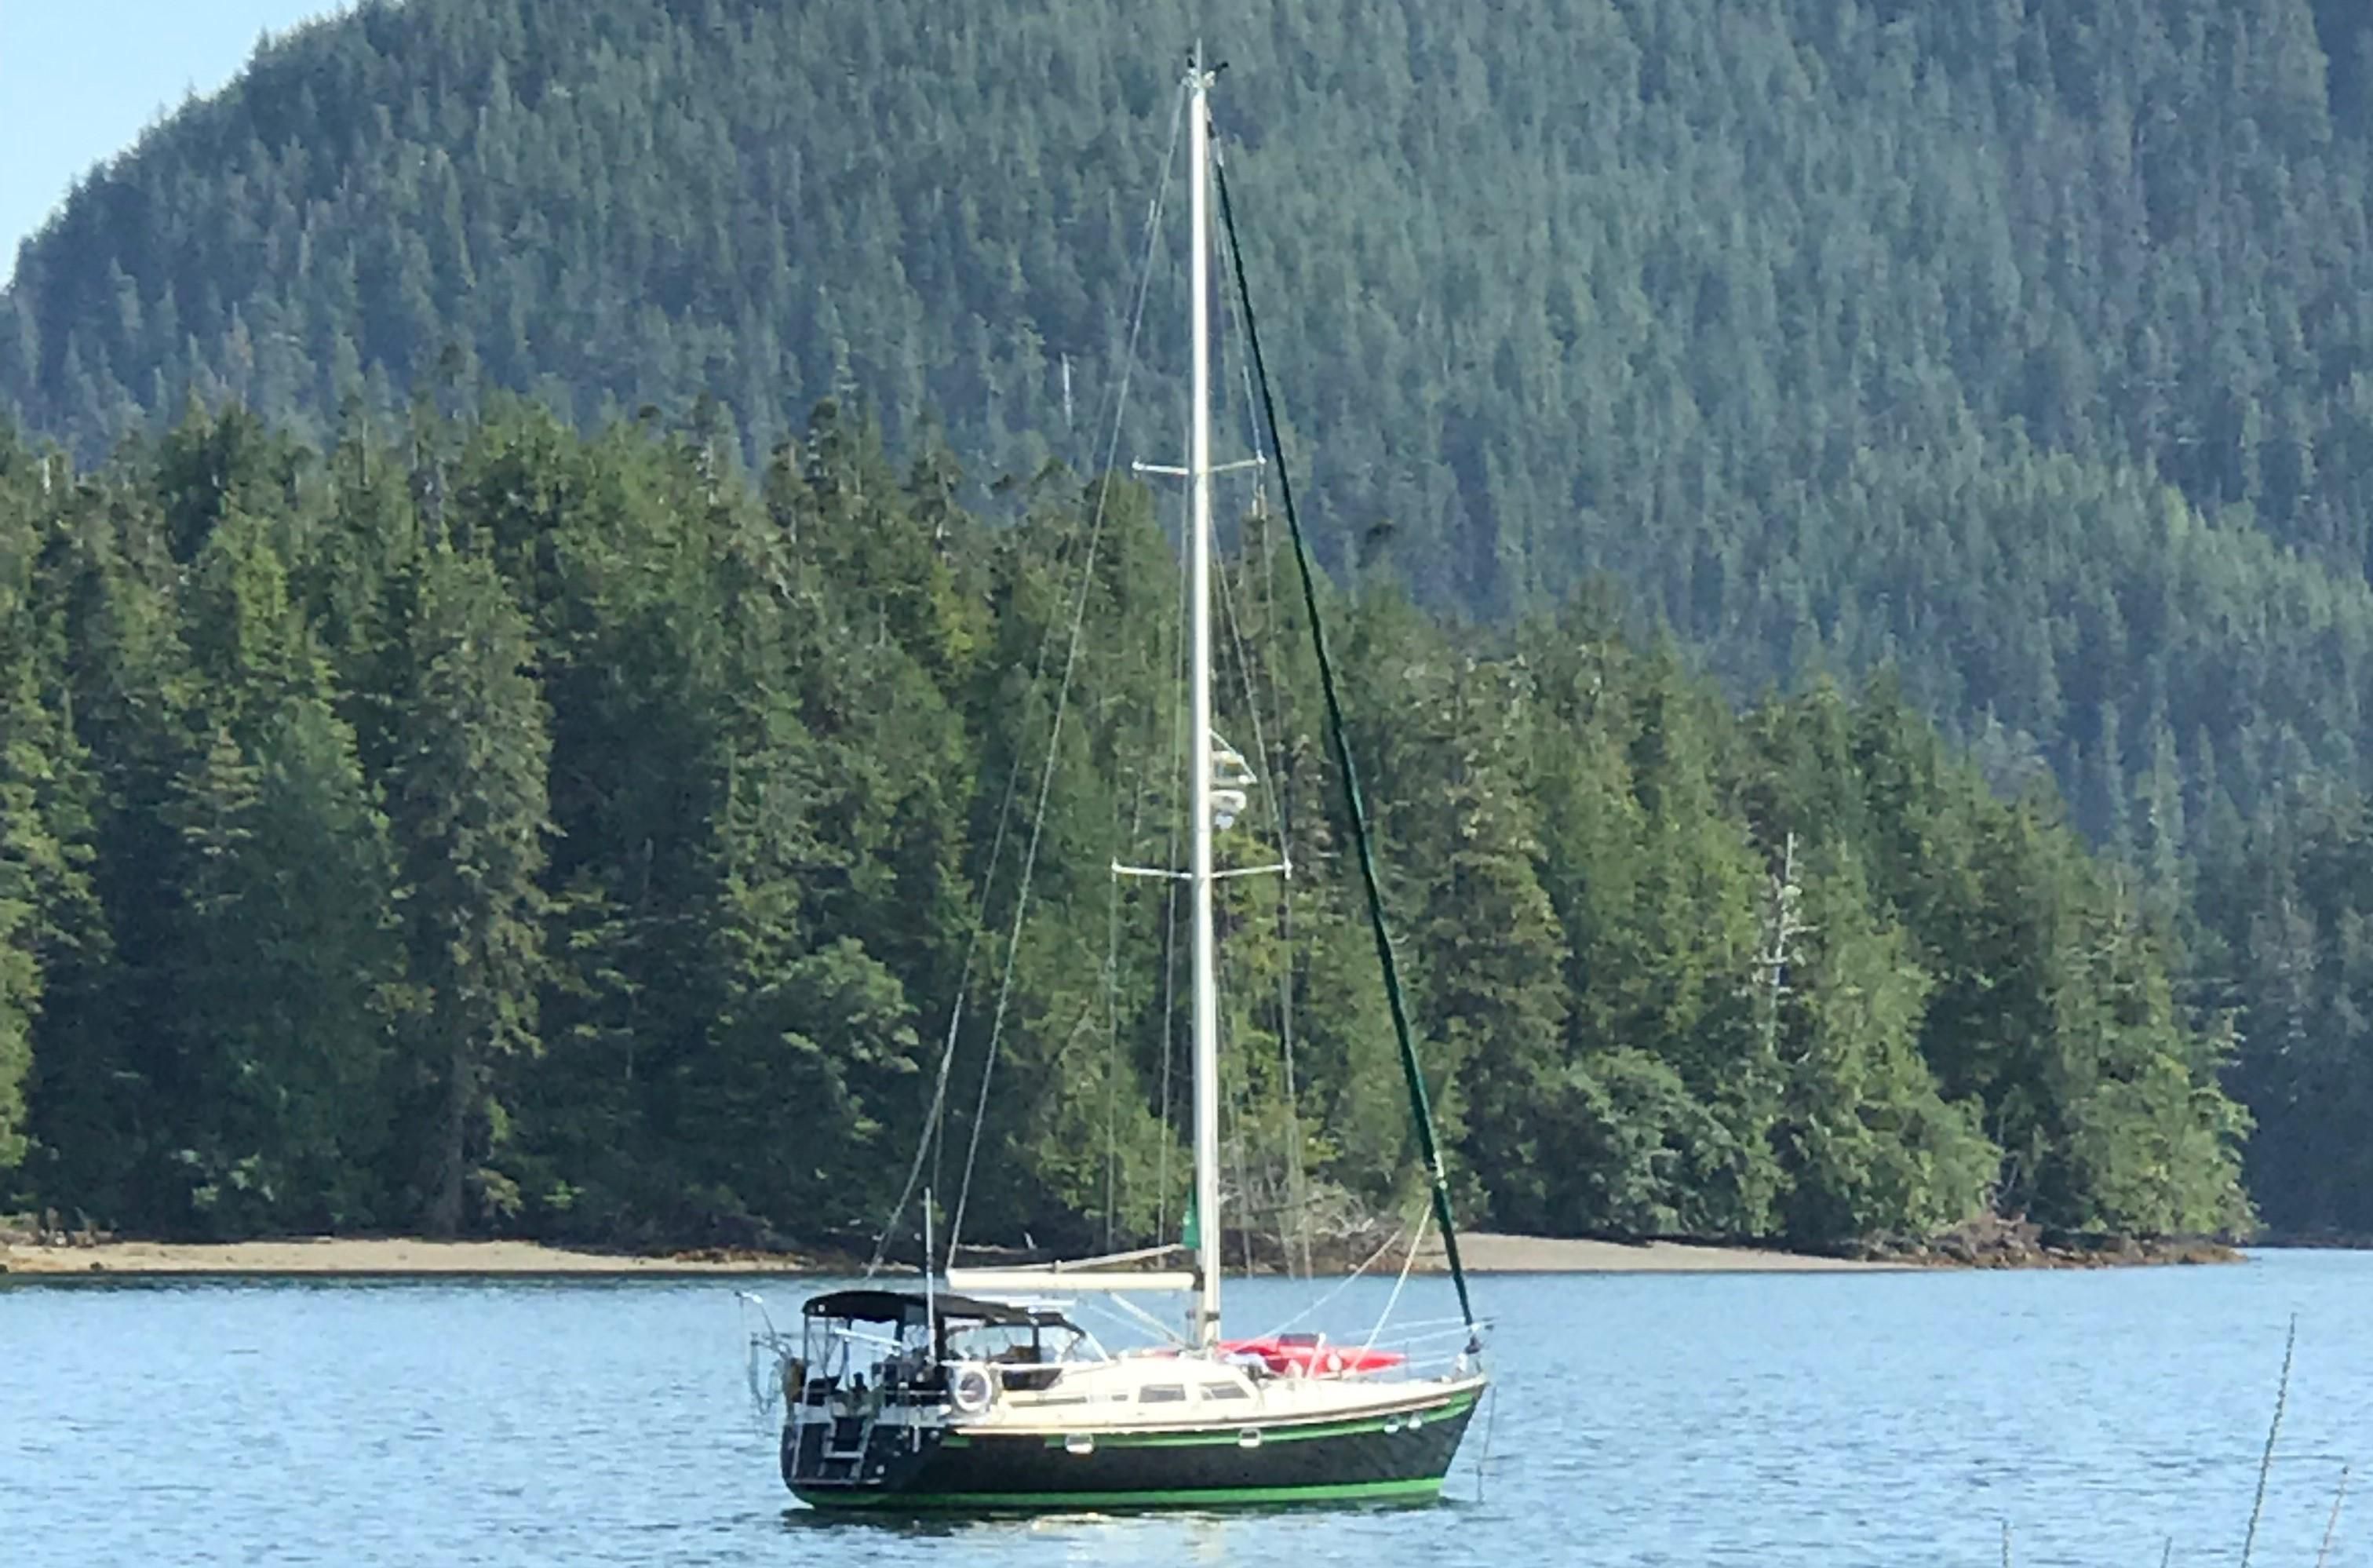 sceptre 41 sailboat review